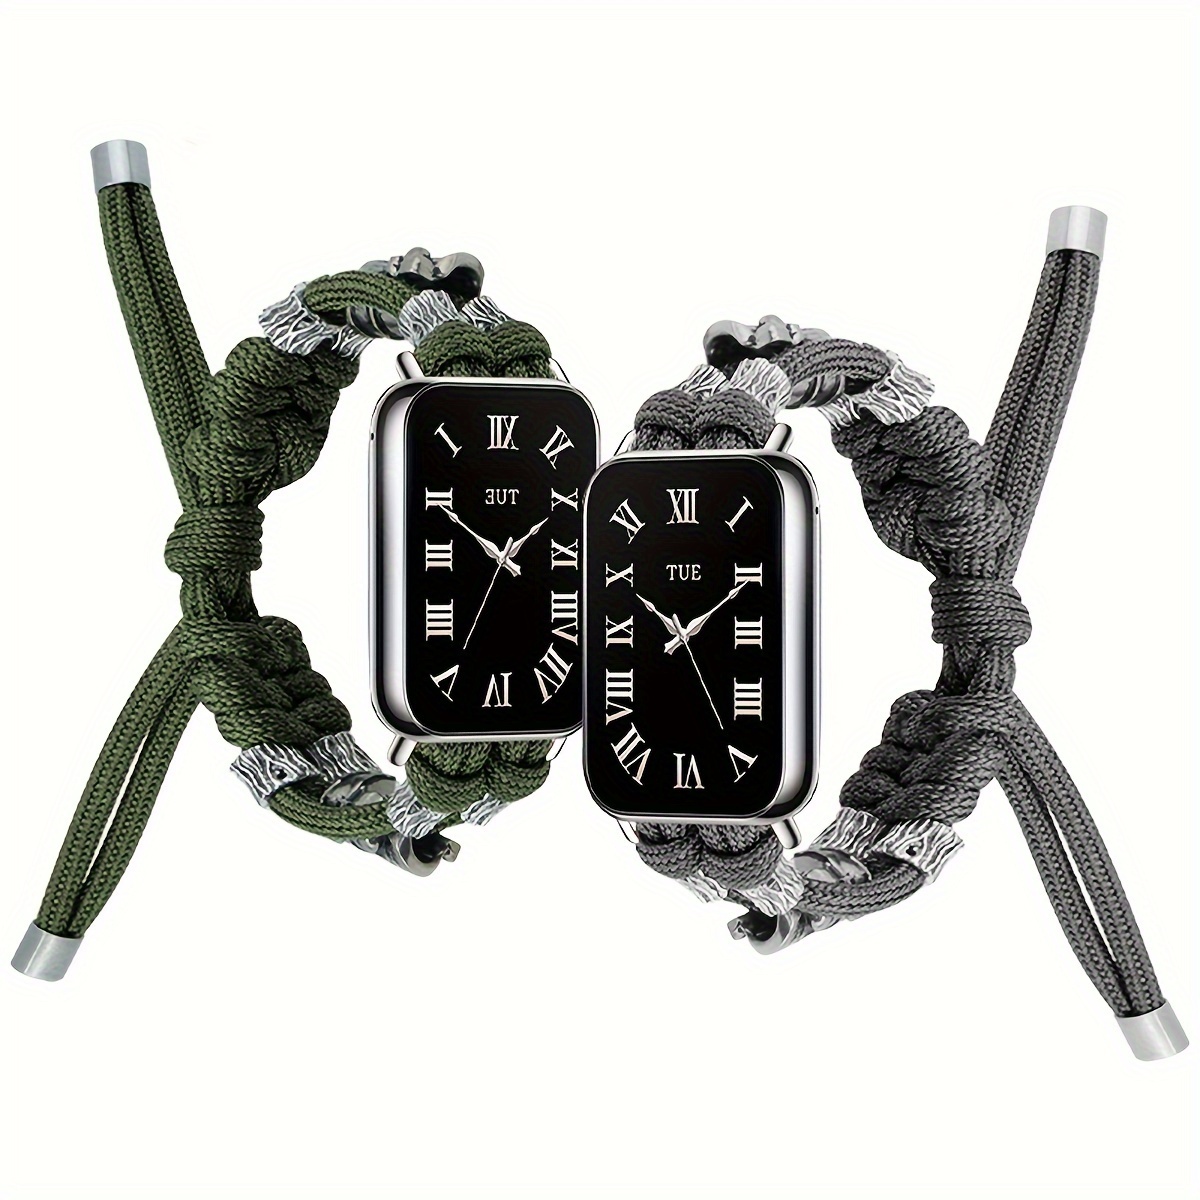 Strap Mi Band 8 Smartband Faux Leather Watch Band Xiaomi Mi - Temu